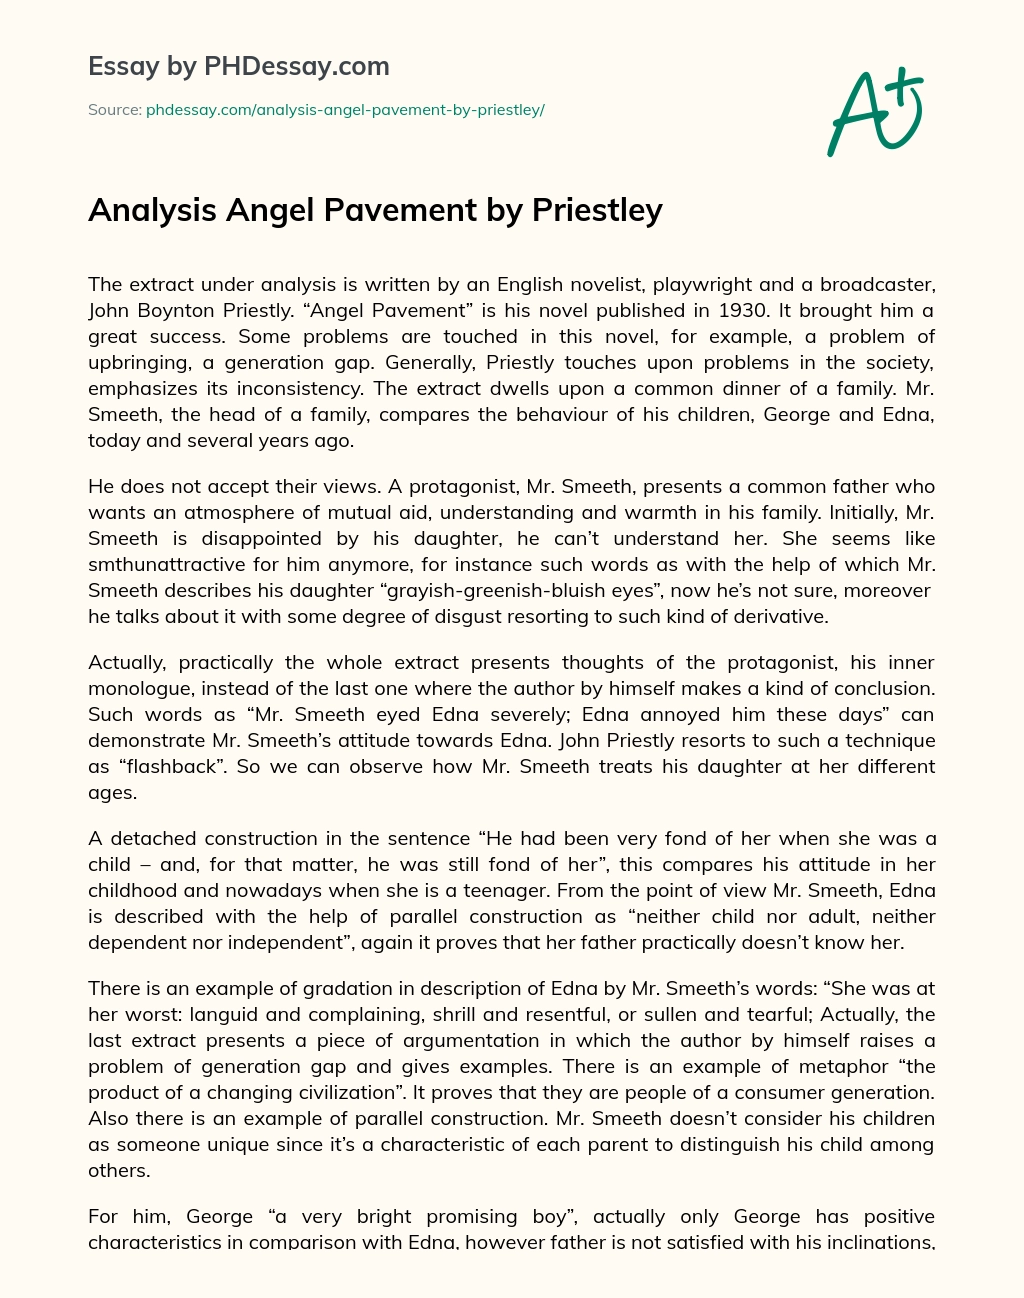 Analysis Angel Pavement by Priestley essay